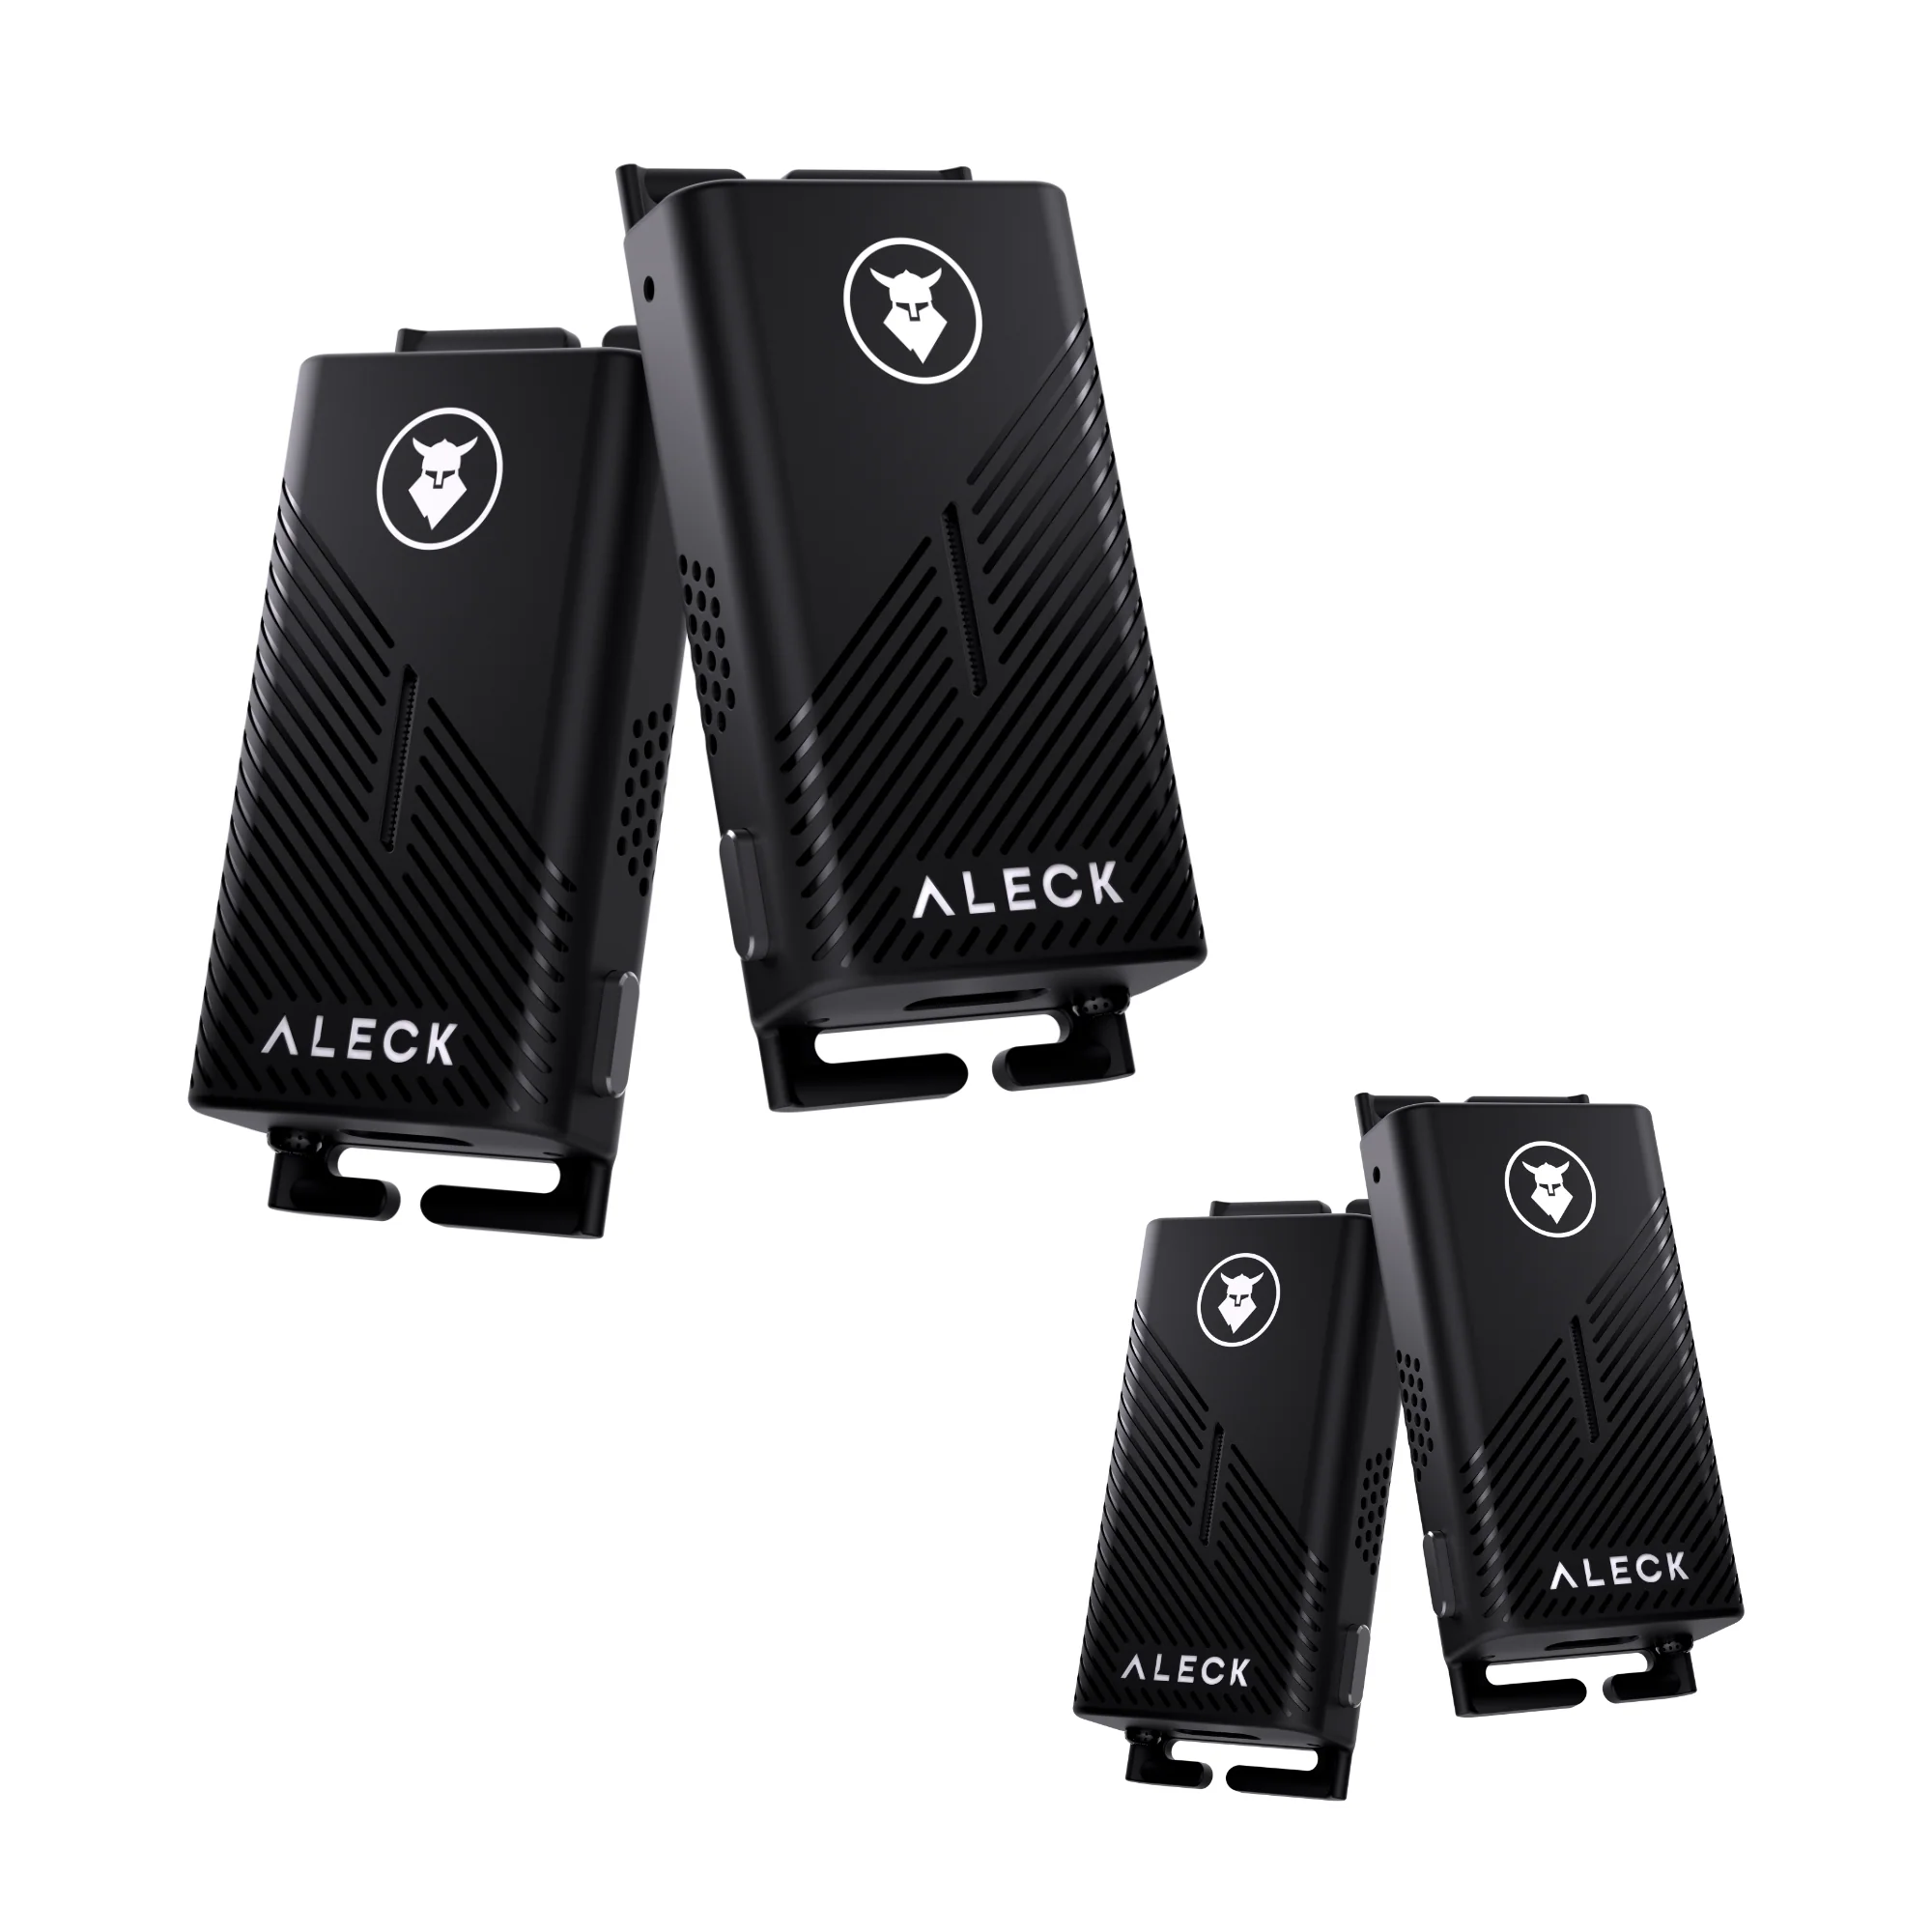 Aleck Aleck Punks 2-pack Wireless Audio